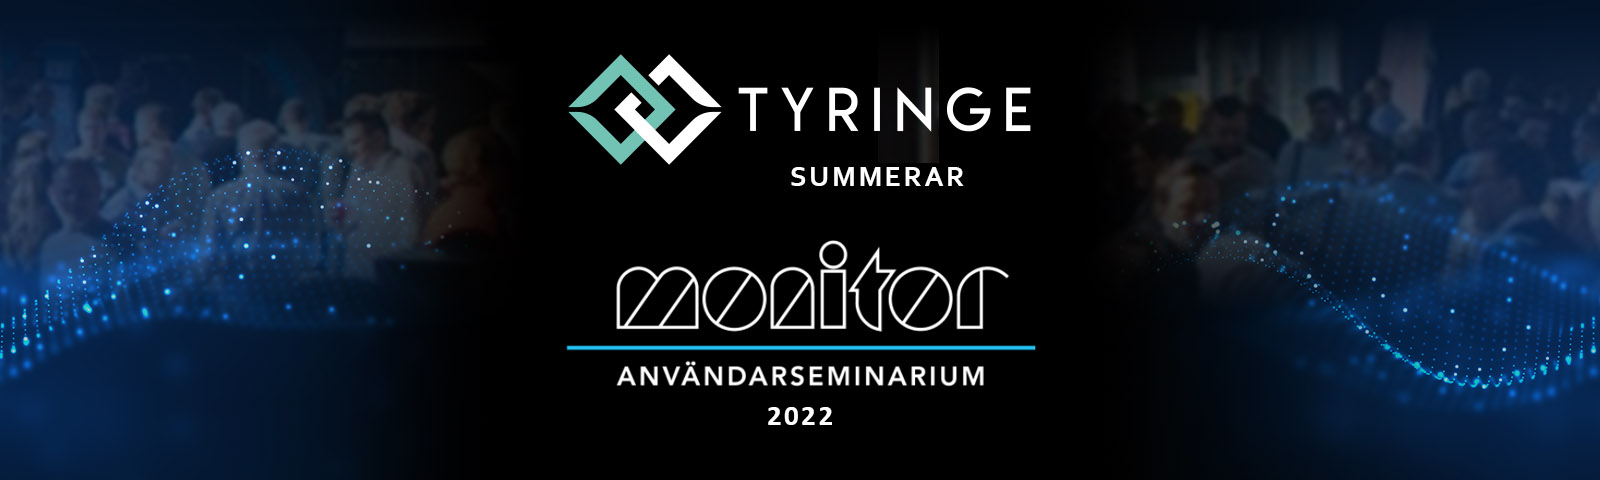 Tyringe at Monitor ERP Arena in Gävle – 100% match